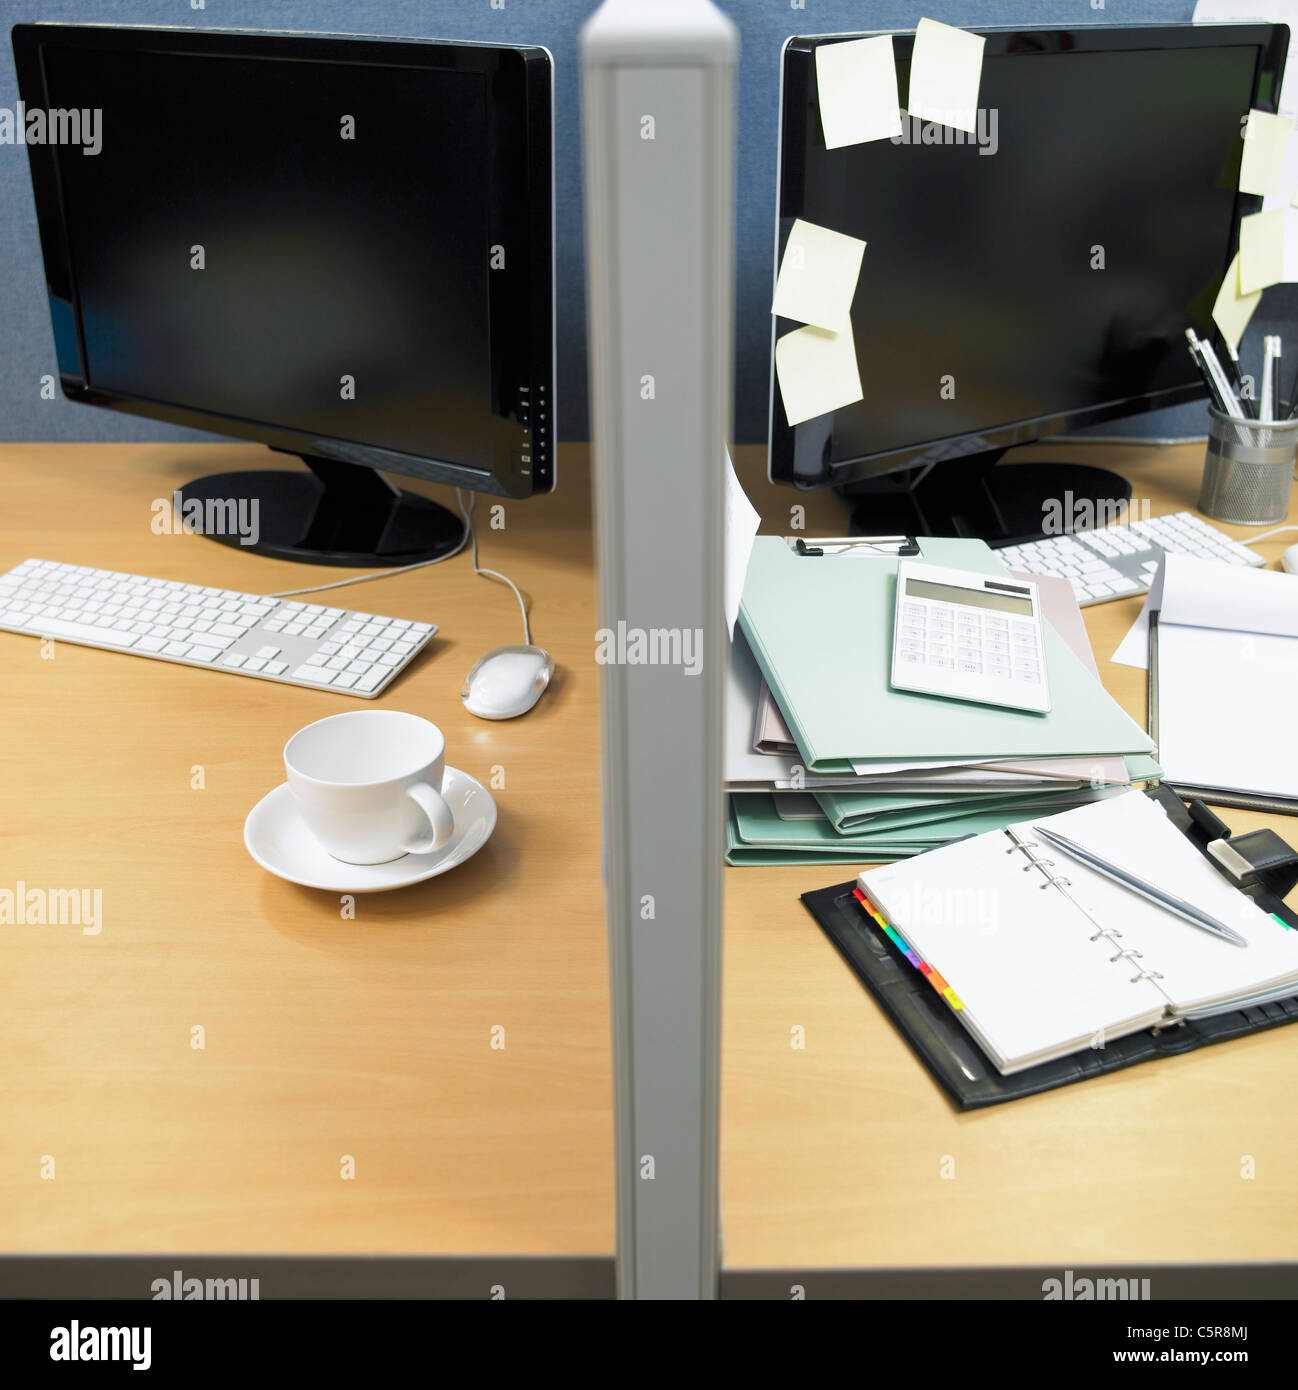 Organized and disorganized desks Stock Photo